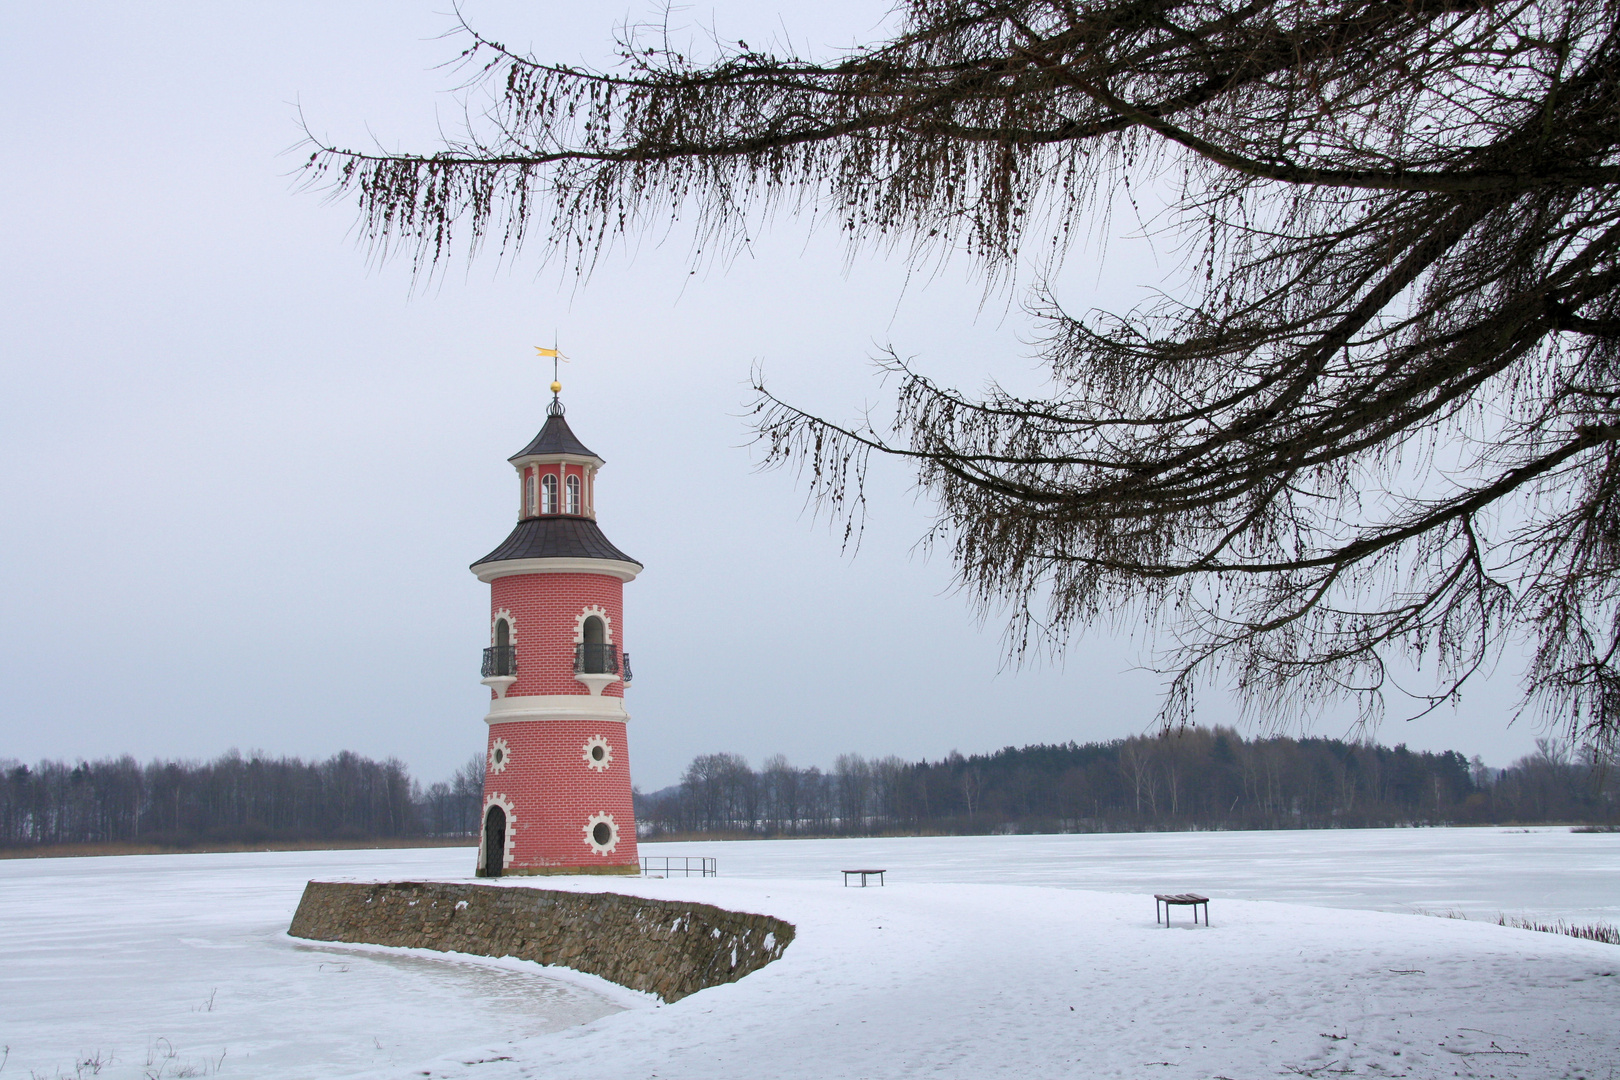 Leuchtturm in Moritzburg bei Dresden